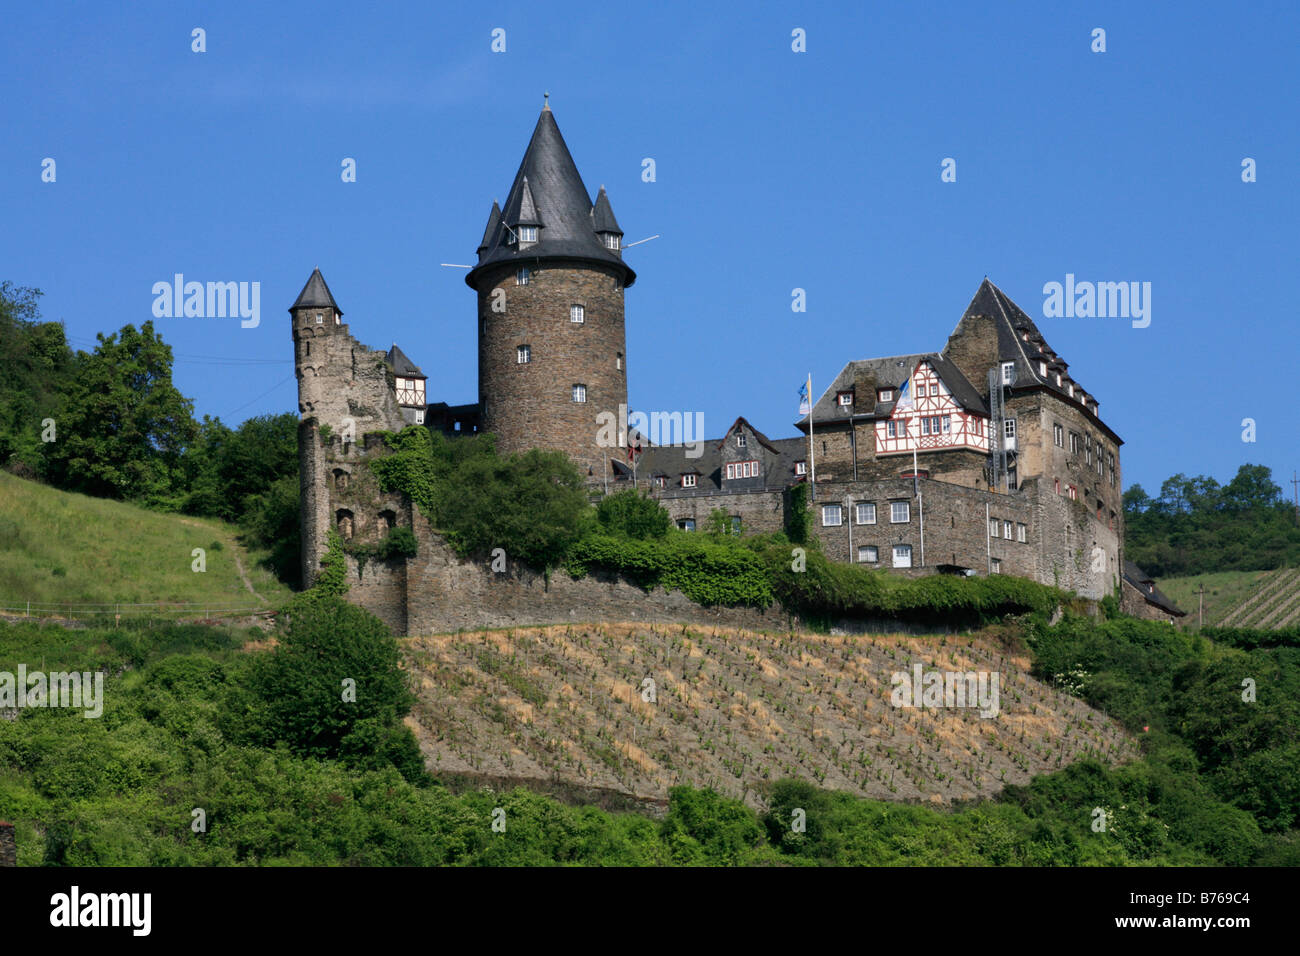 Gorges du rhin château stahleck vallée du Haut-Rhin moyen mayence bingen rhénanie allemagne europe Banque D'Images